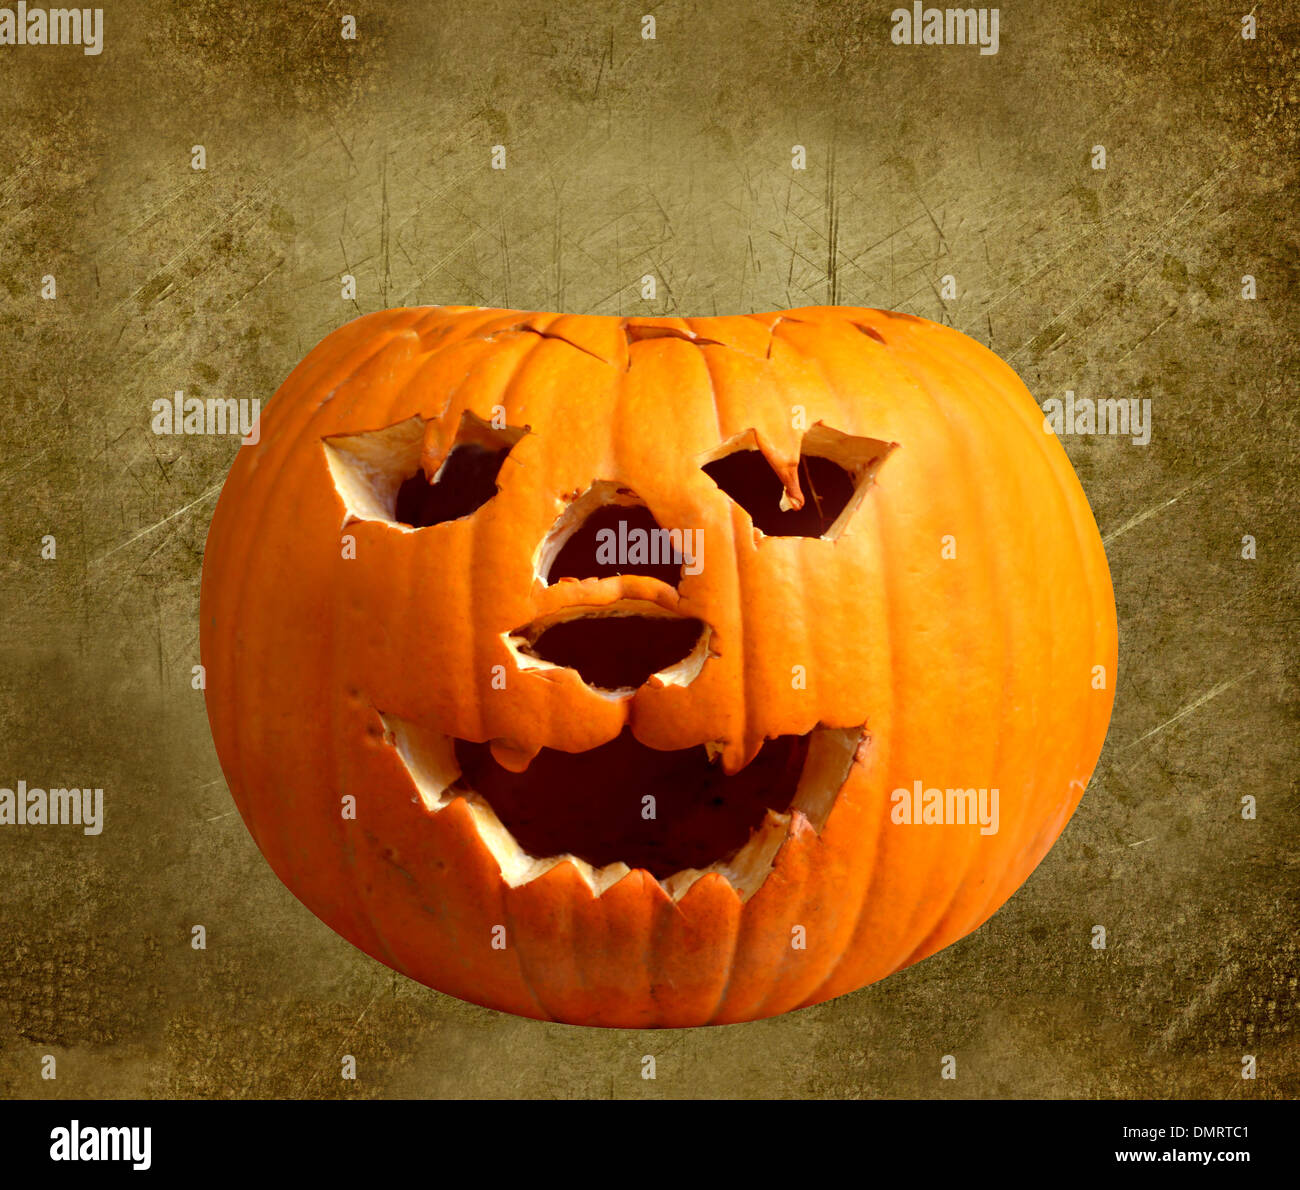 Halloween pumpkin with scary face on dark grunge background. Stock Photo